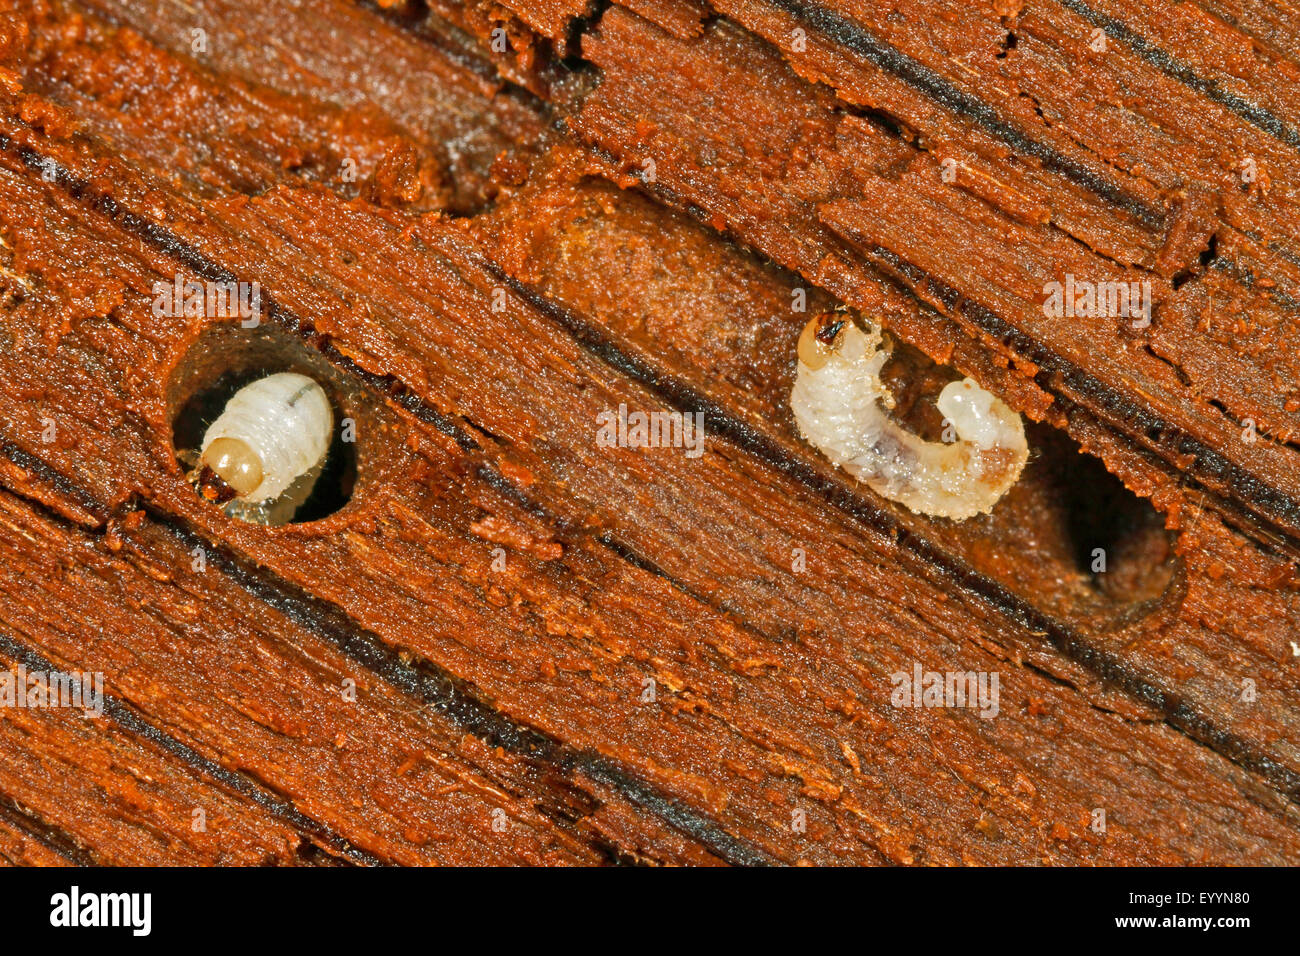 Grub (Aesalus scarabaeoides), beetle larvae, Germany Stock Photo